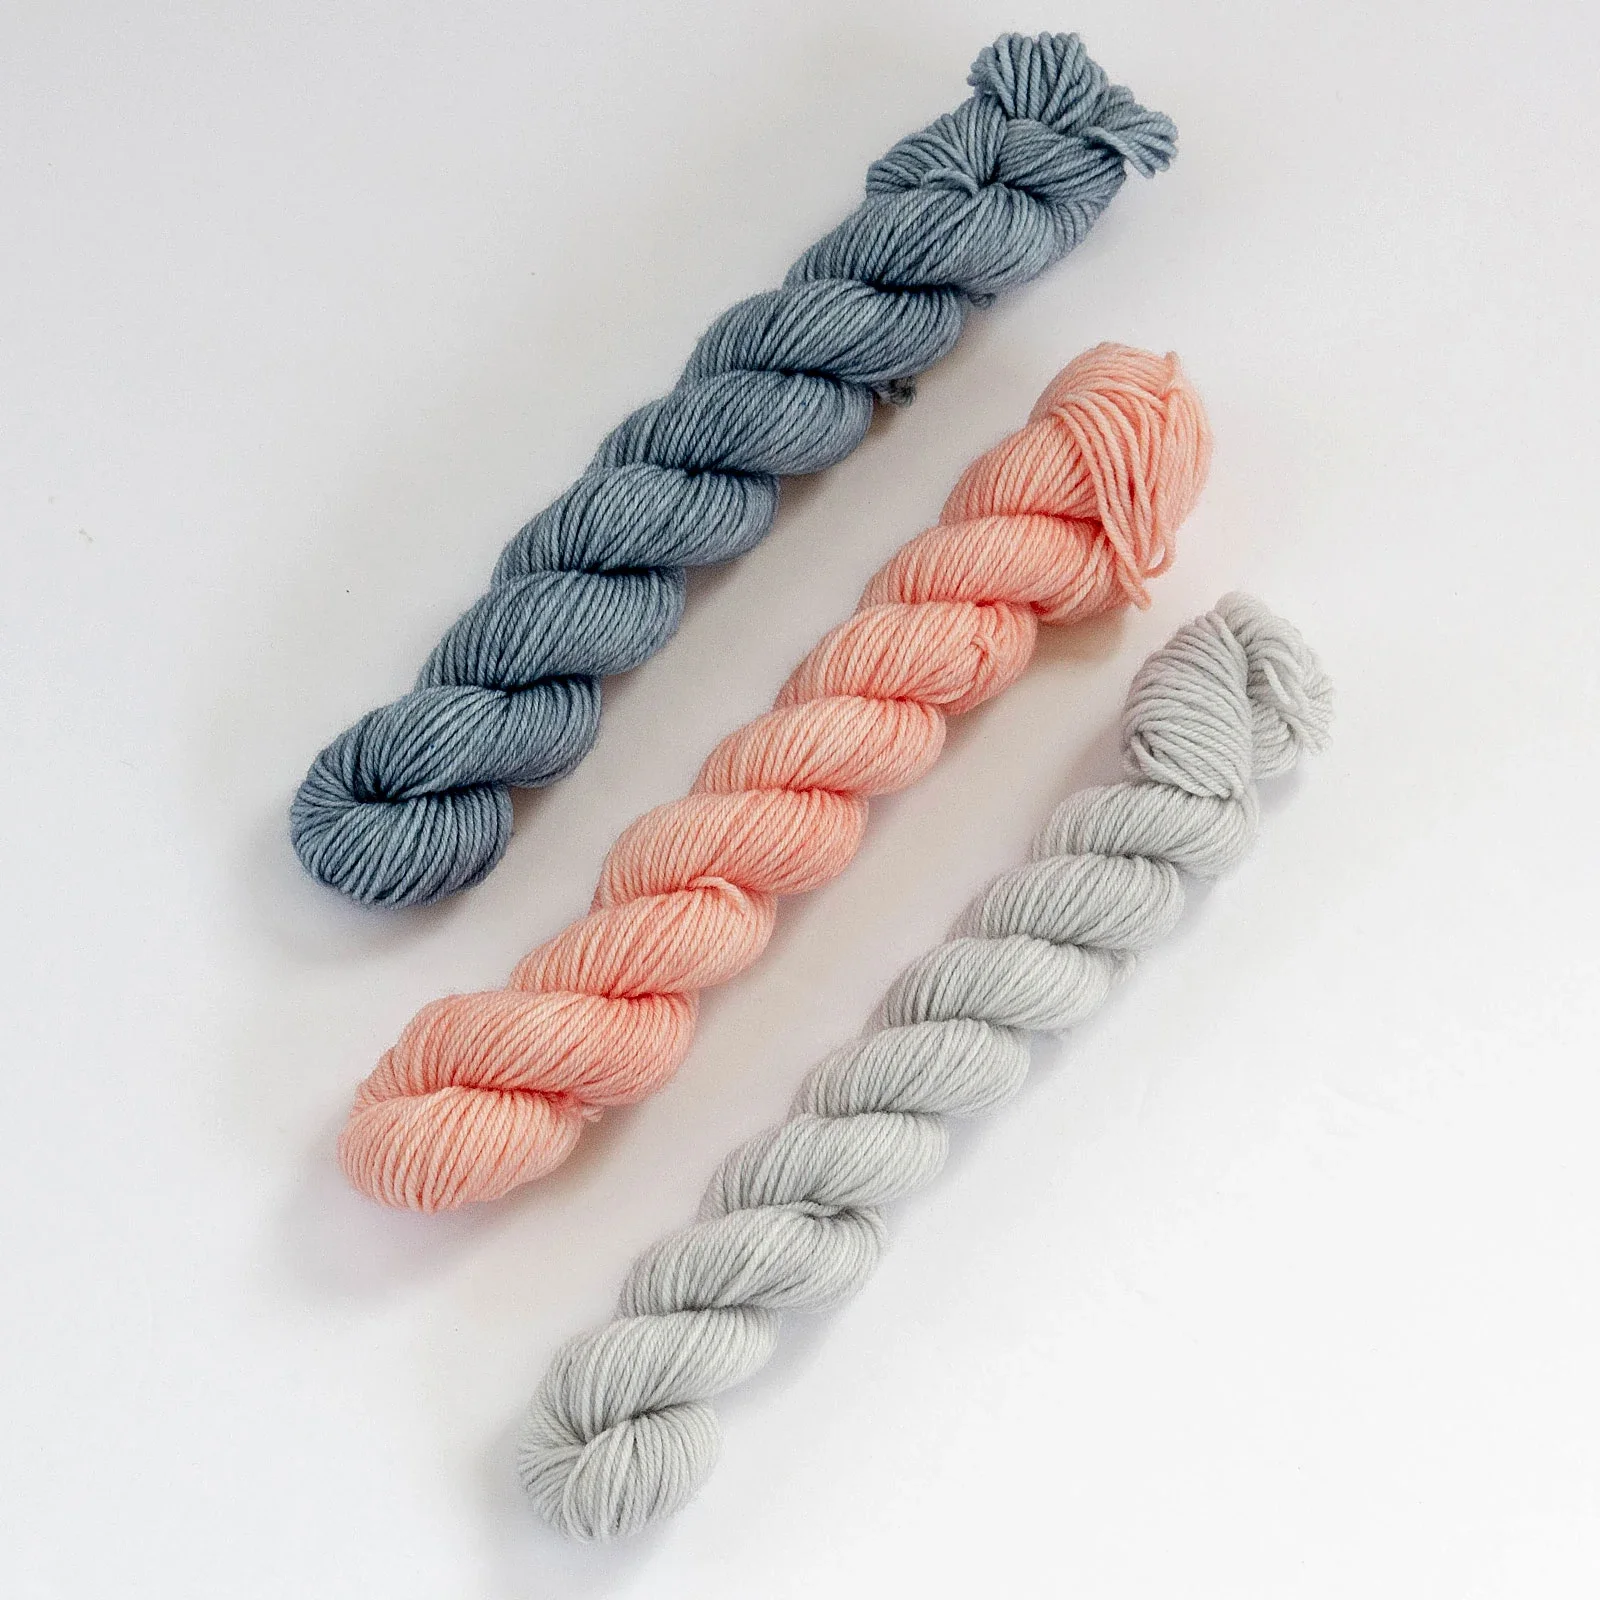 Hand Dyed Sock Yarn Mini Skeins of Merino / Nylon in Coral, Indigo Blue and Gray